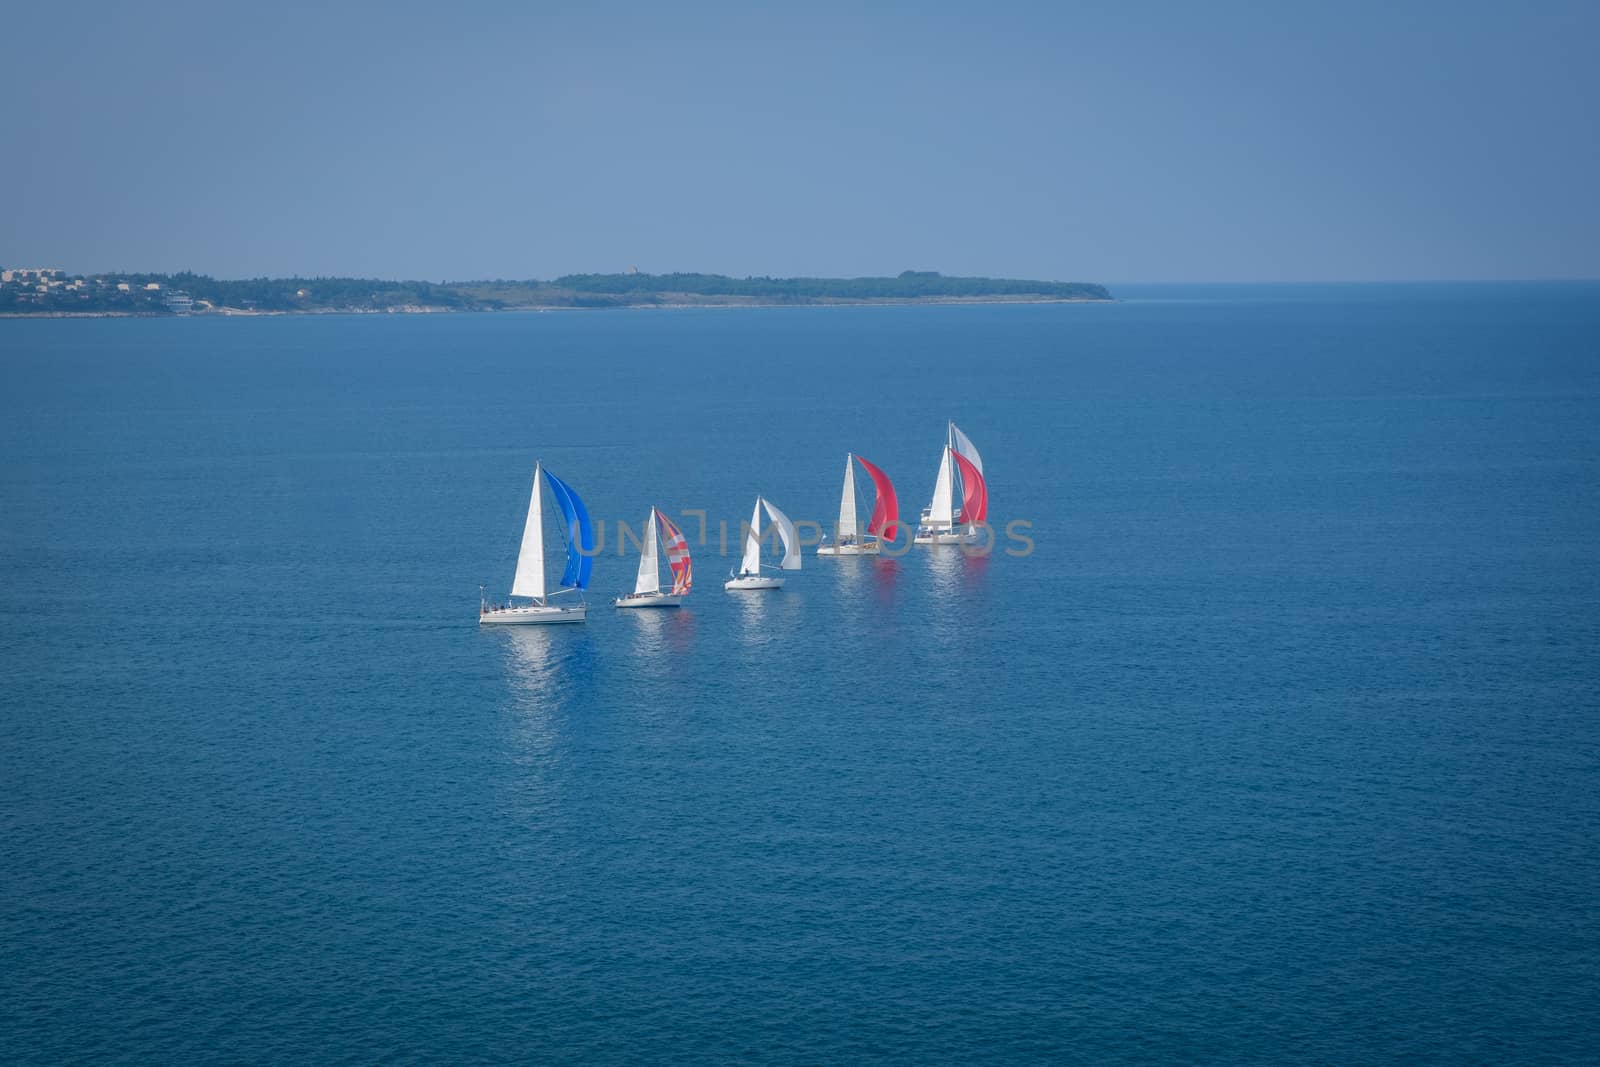 Sailing boats off coast compete in regatta by asafaric